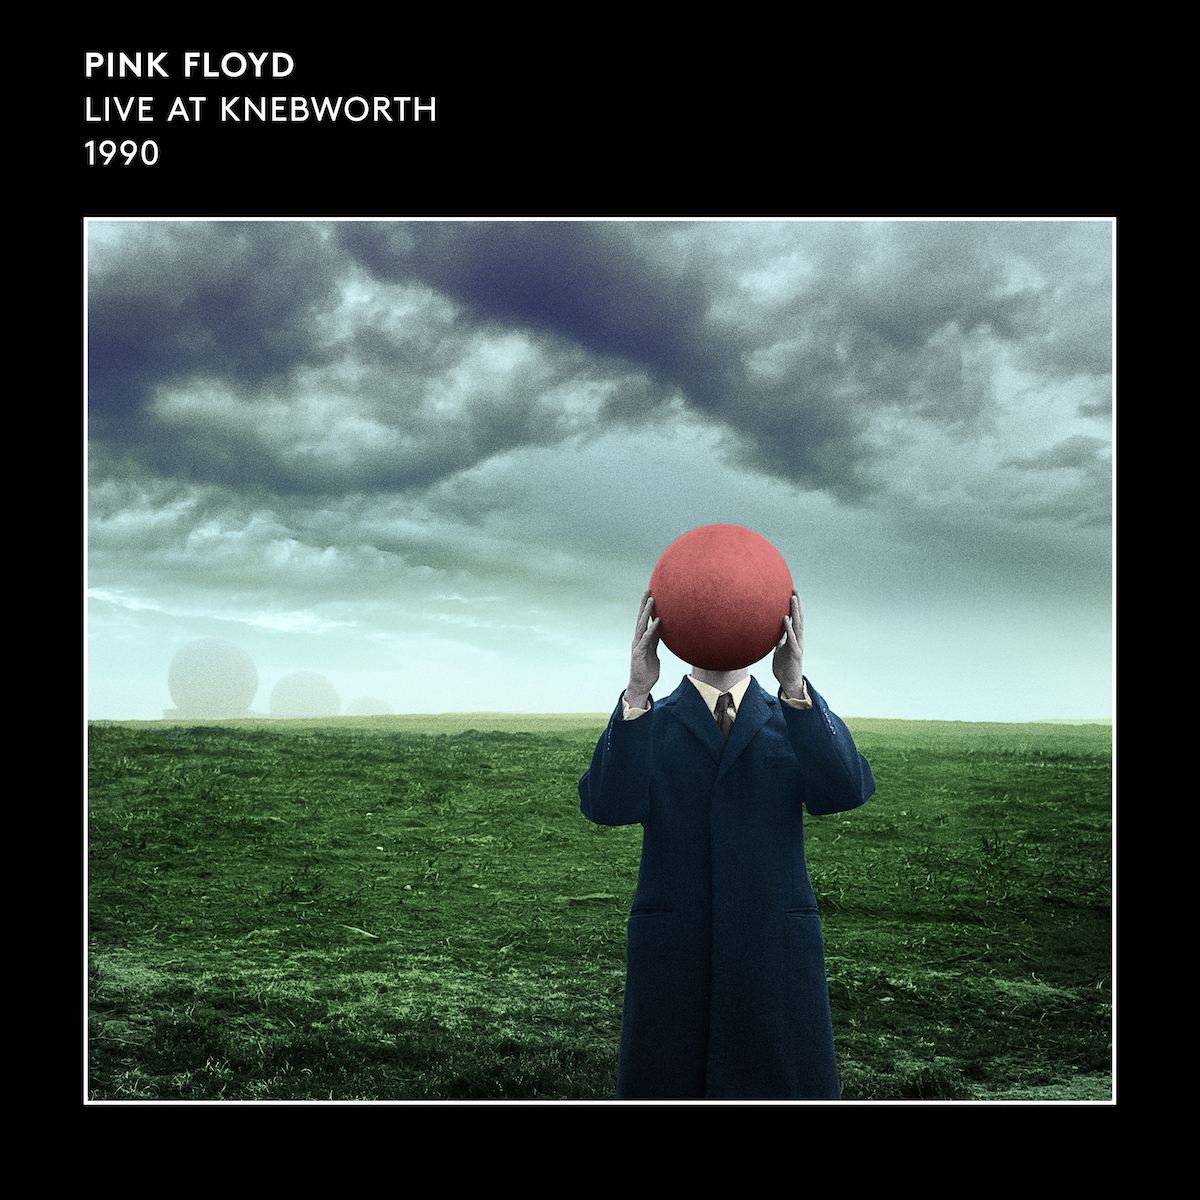 Pink Floyd, 'Live at Knebworth 1990' uscirà su CD e doppio vinile